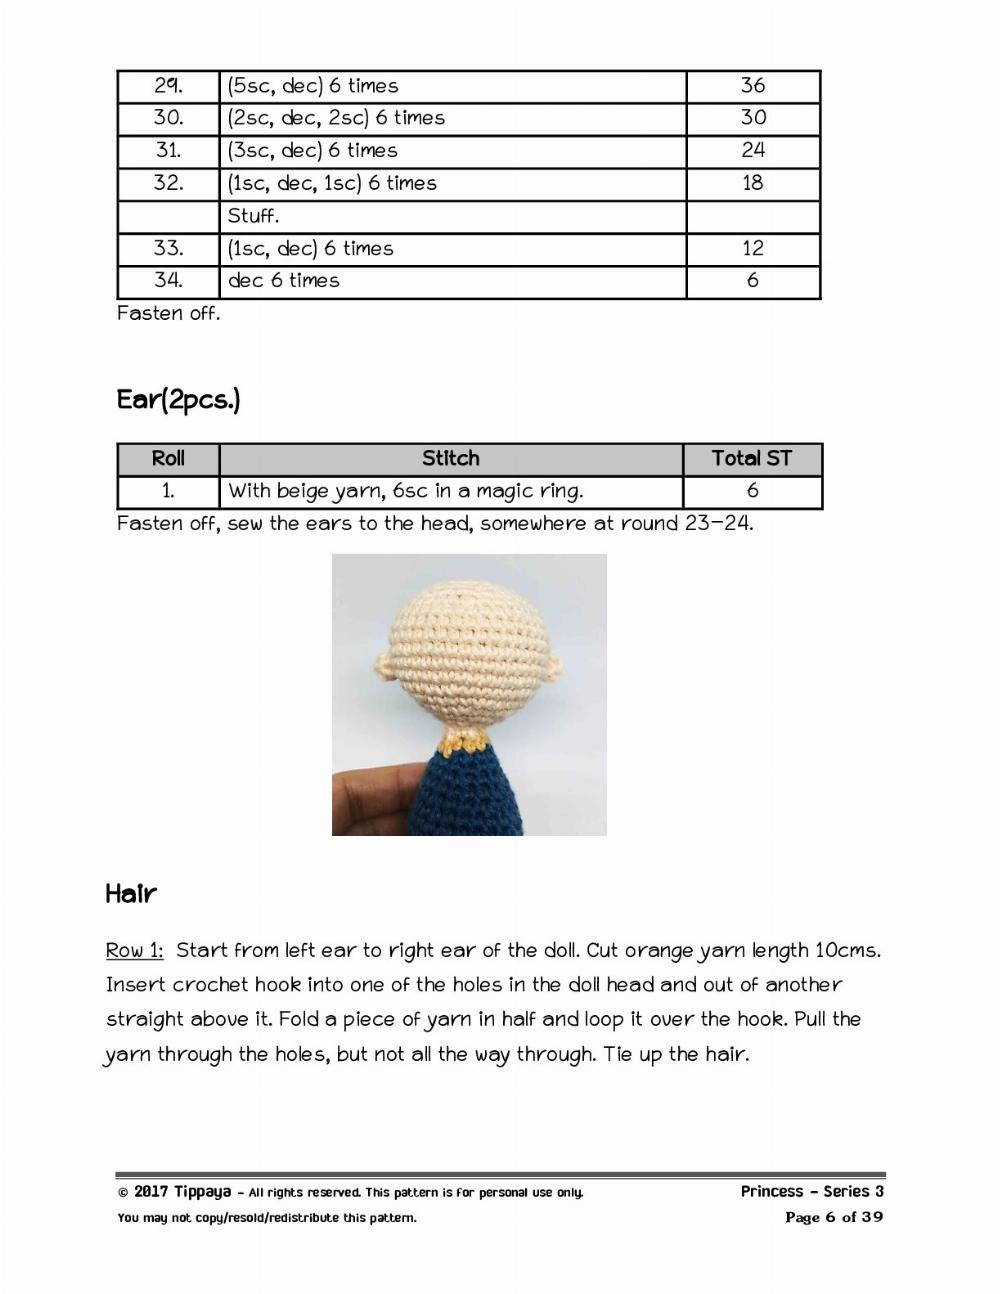 Princess Series3 crochet pattern